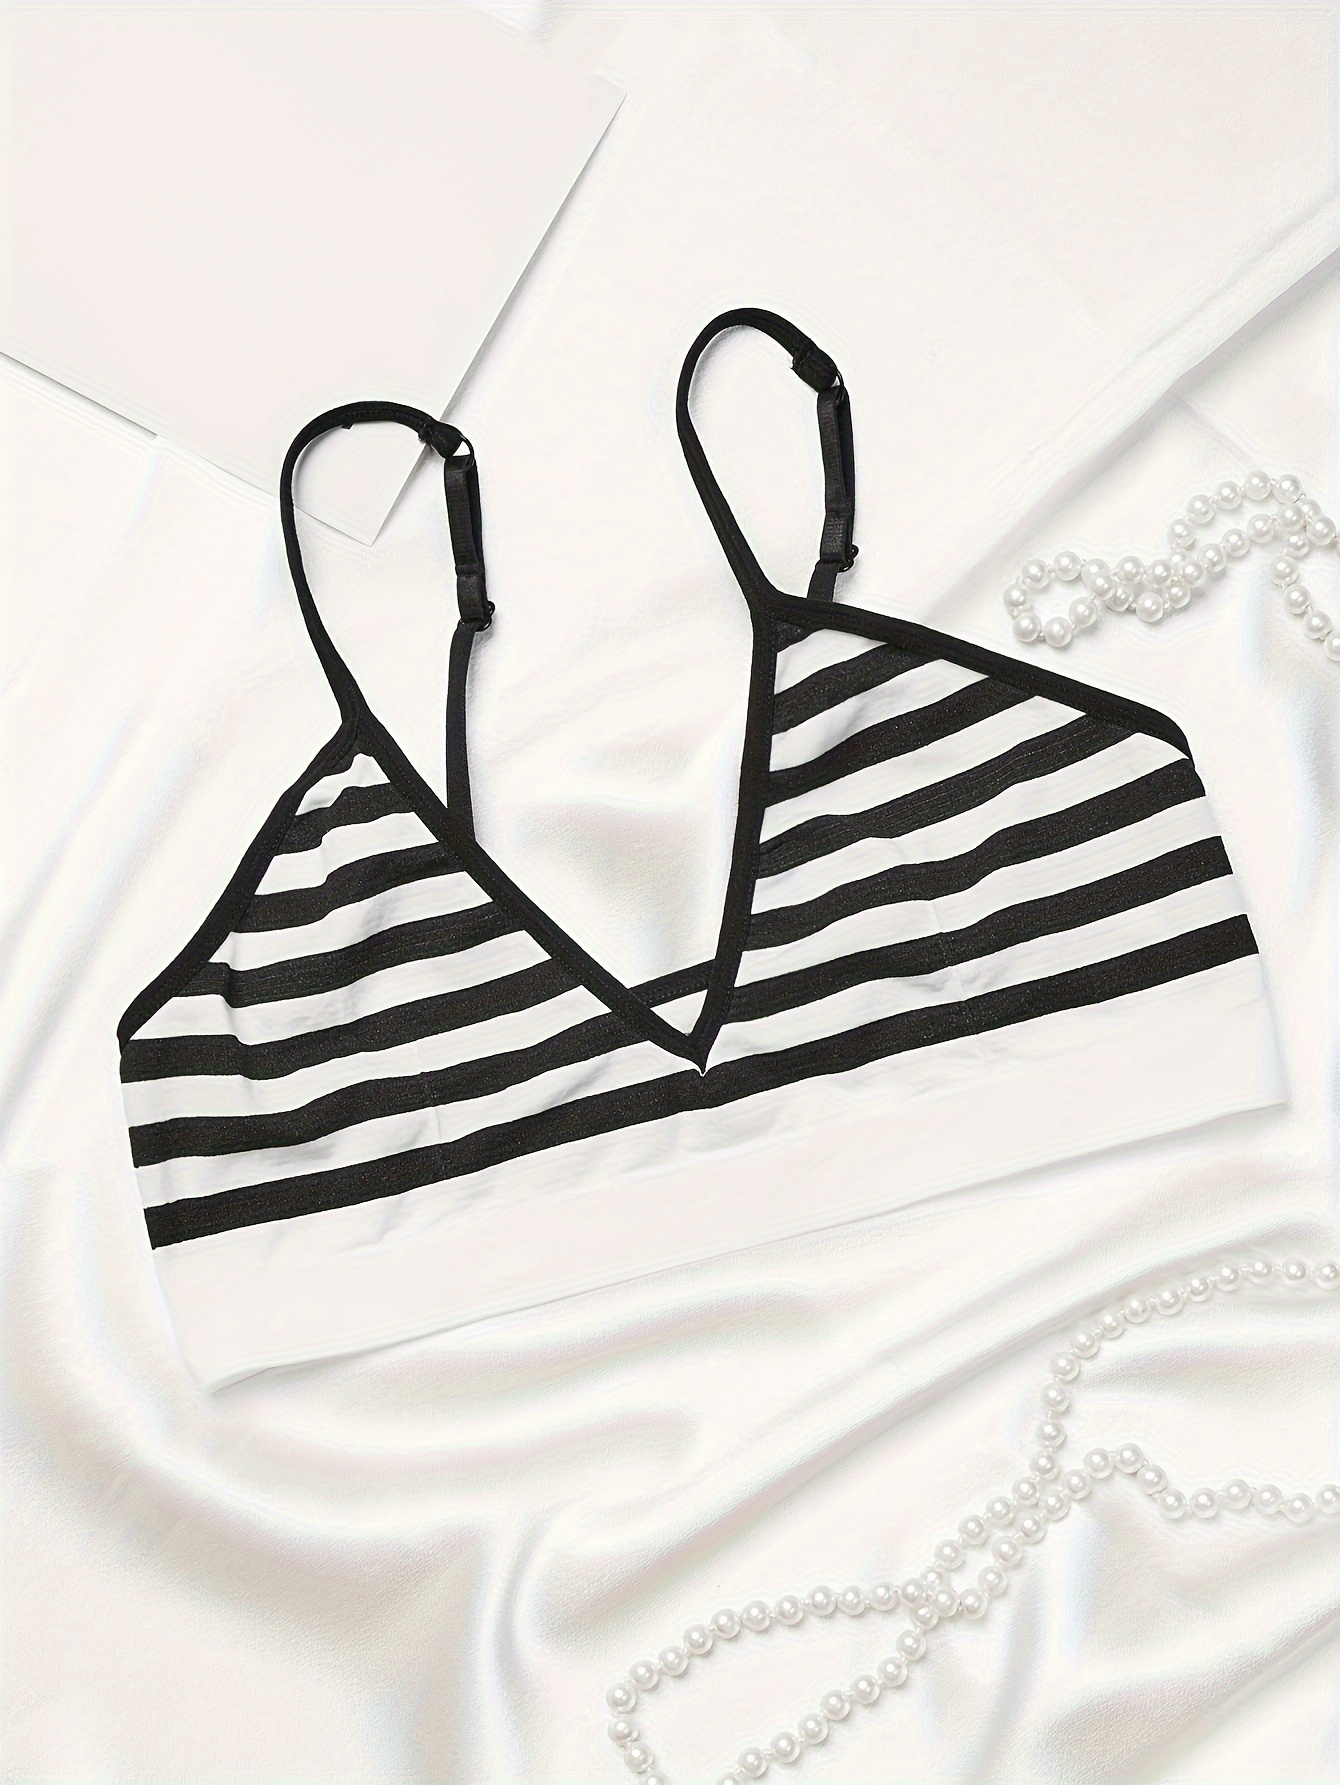 Order Lingadore Striped Zebra Black/Print Push Up bra online.